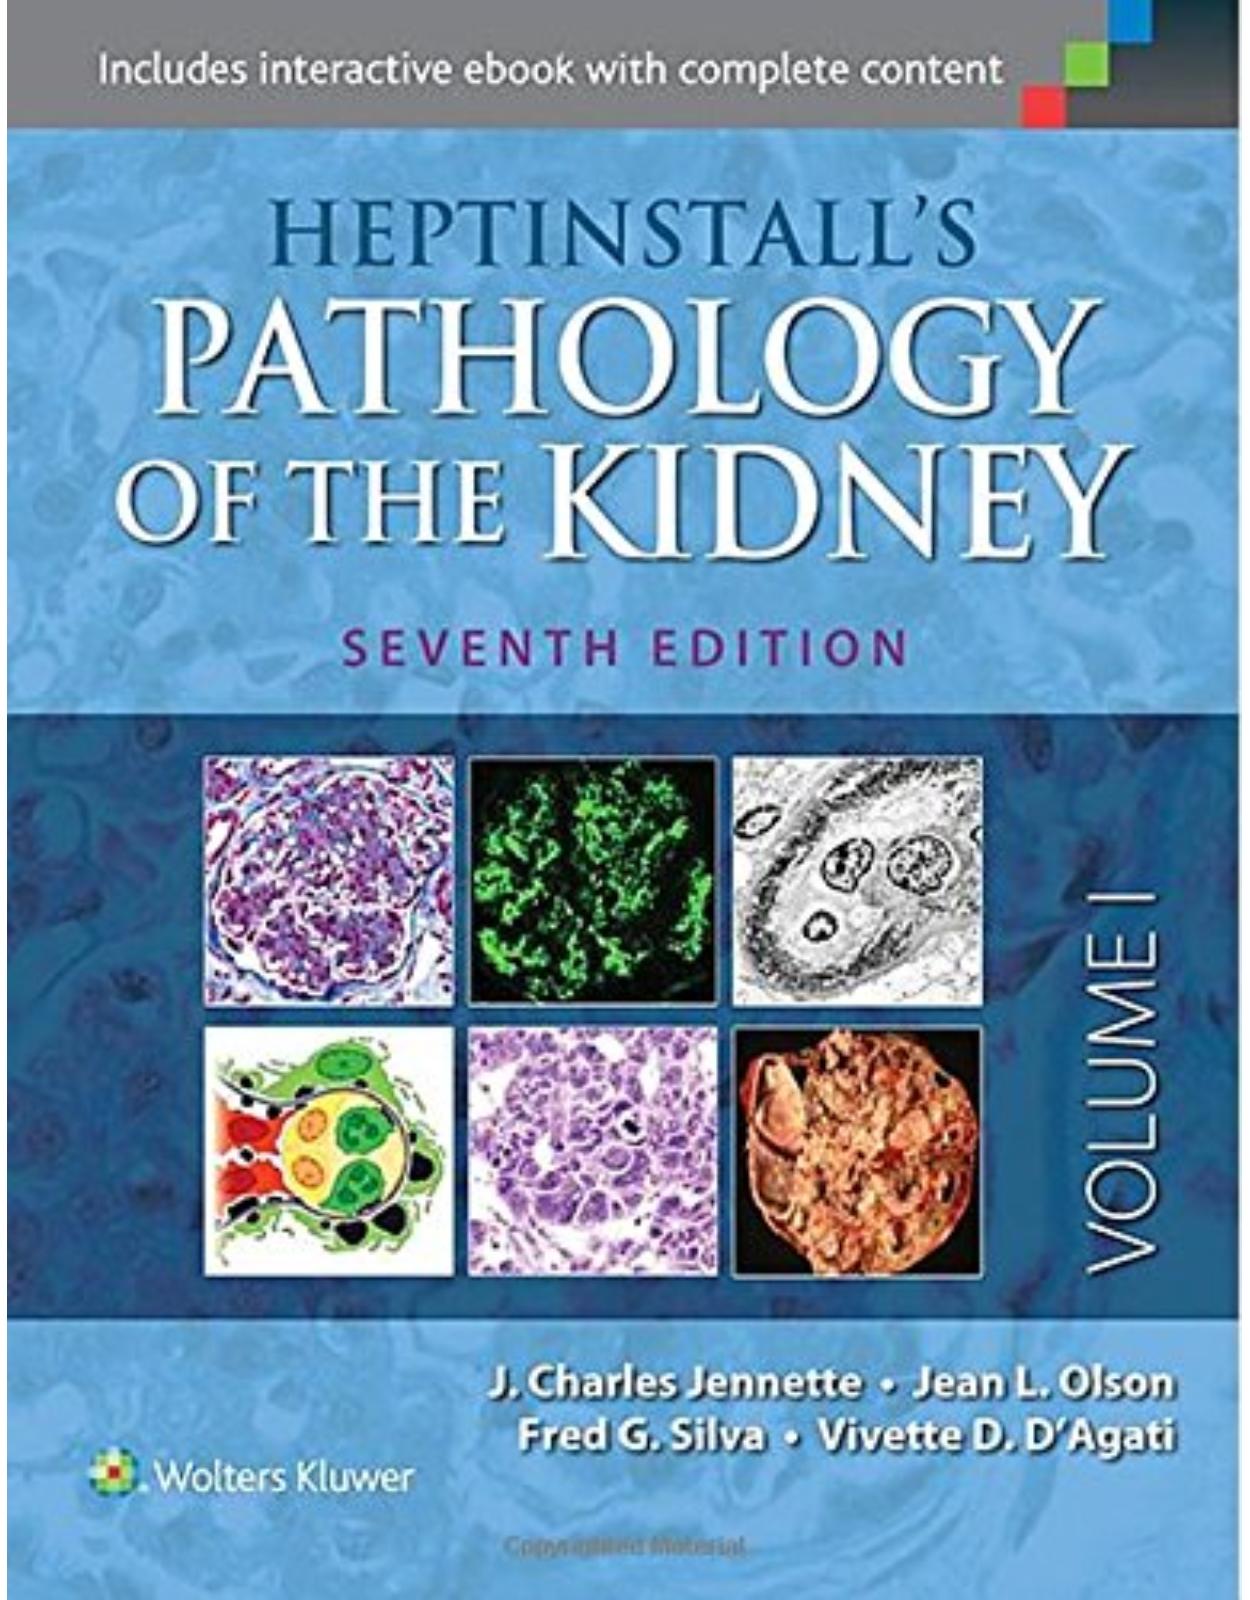 Heptinstall’s Pathology of the Kidney 2 vol set